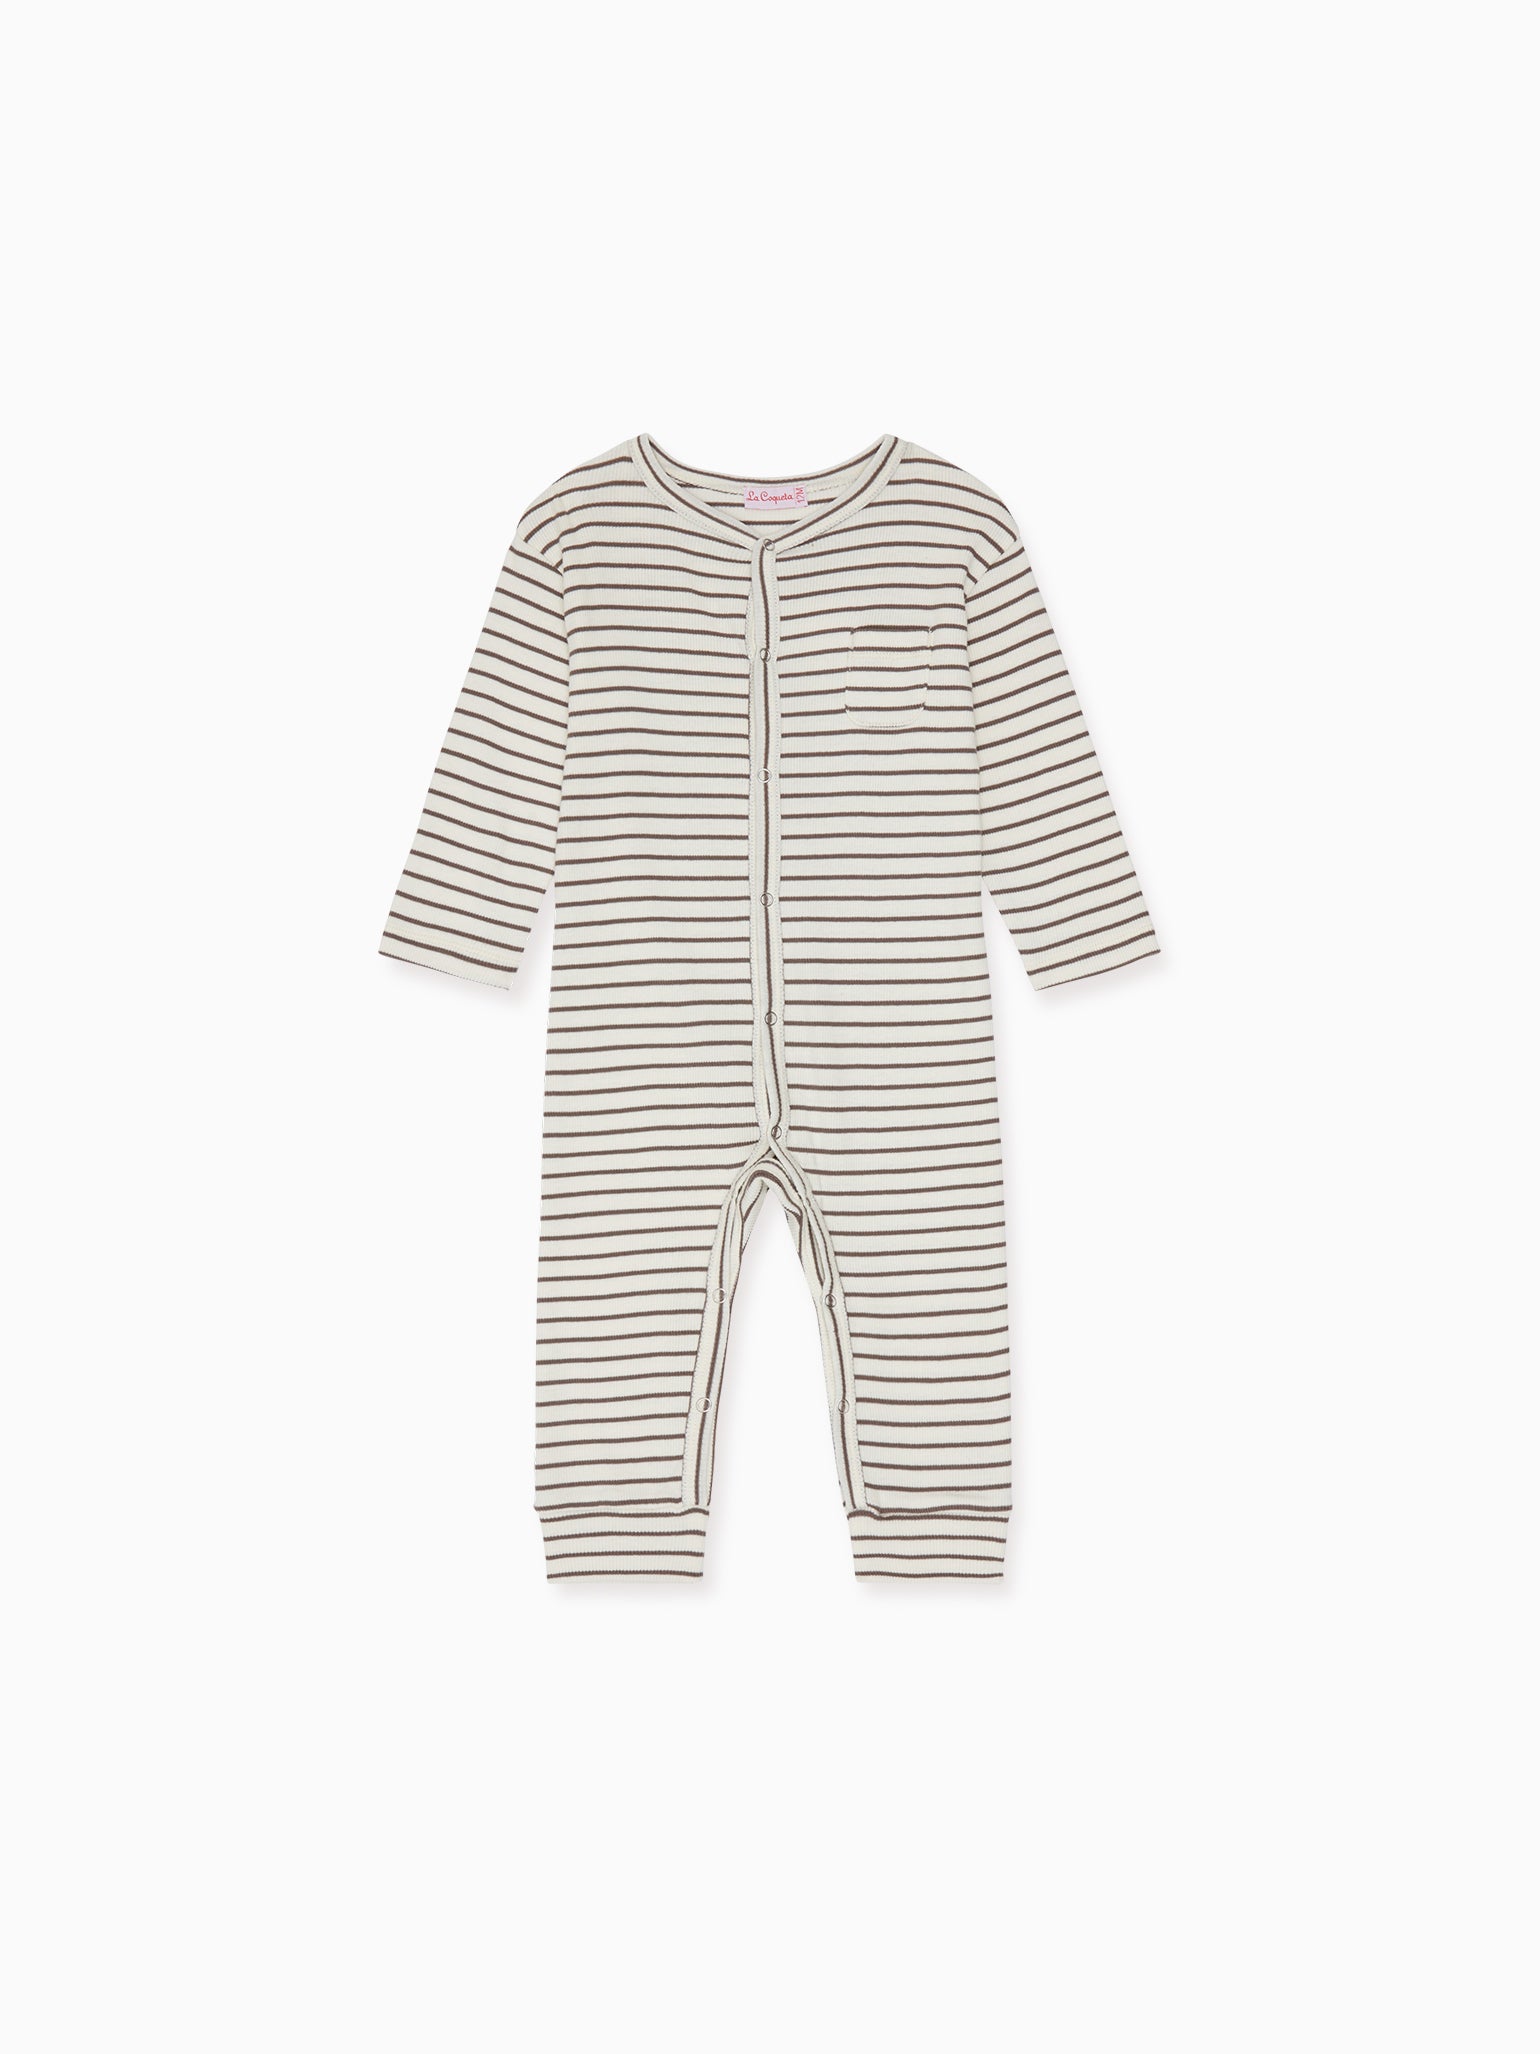 Latte Stripe Levie Baby Sleepsuit